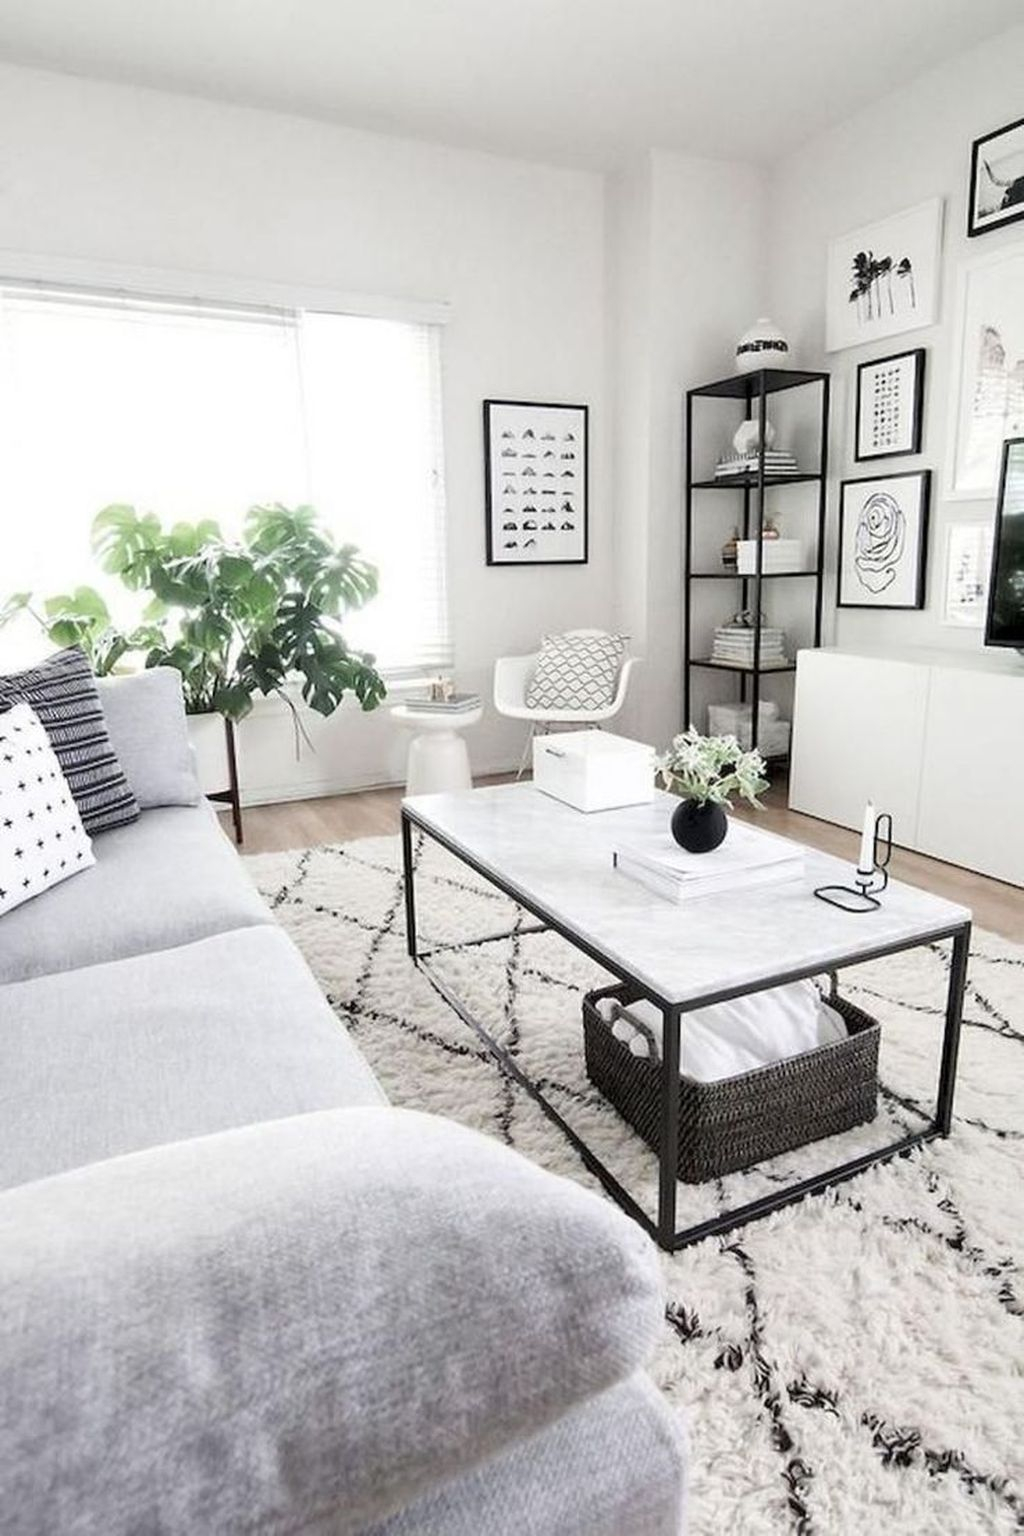 Minimalist Home Interior Design Ideas With A Smart Living Concept41